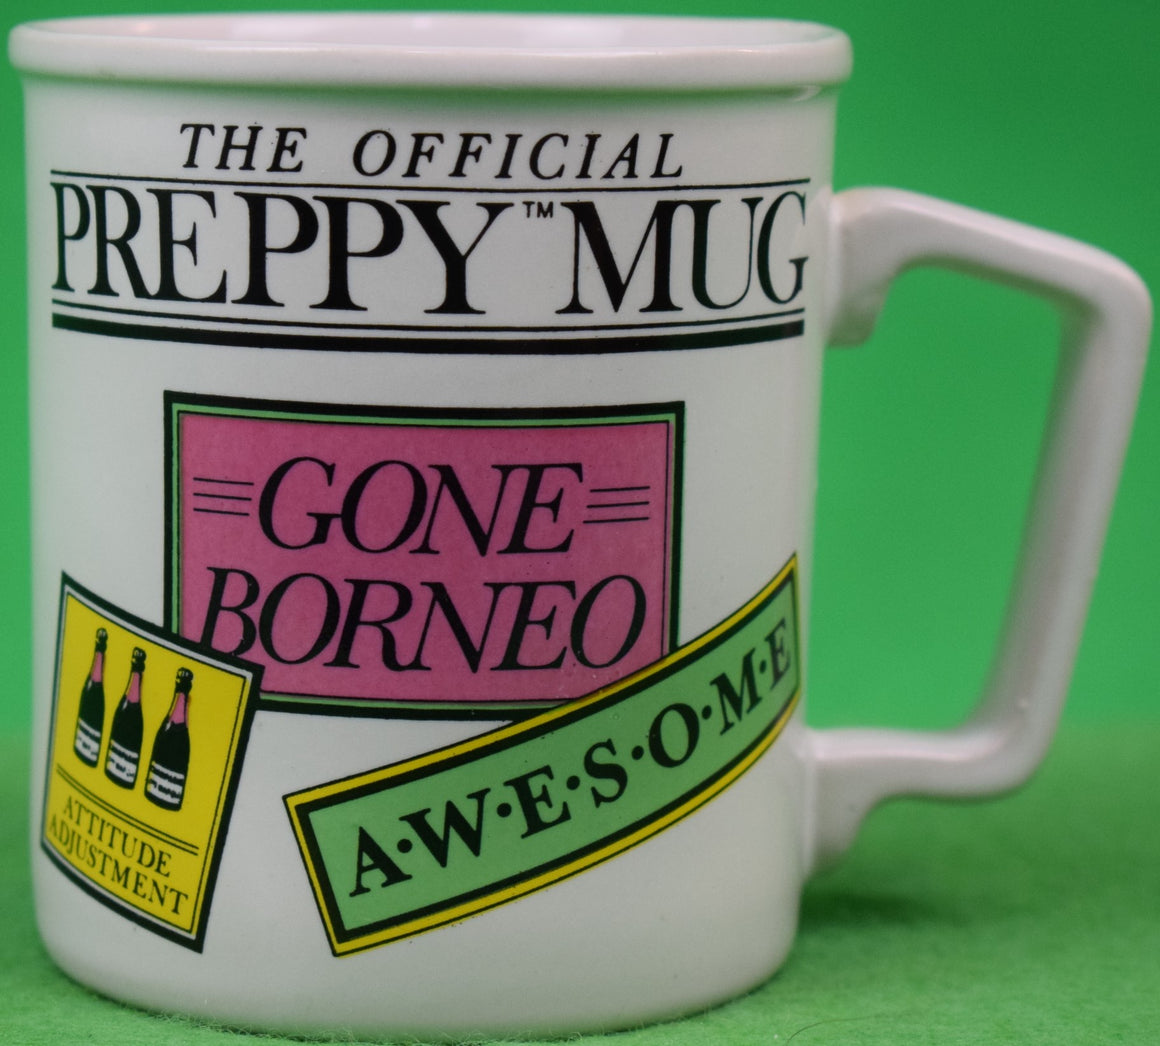 The Official Preppy Gone Borneo/ Awesome/ Attitude Adjustment Mug"